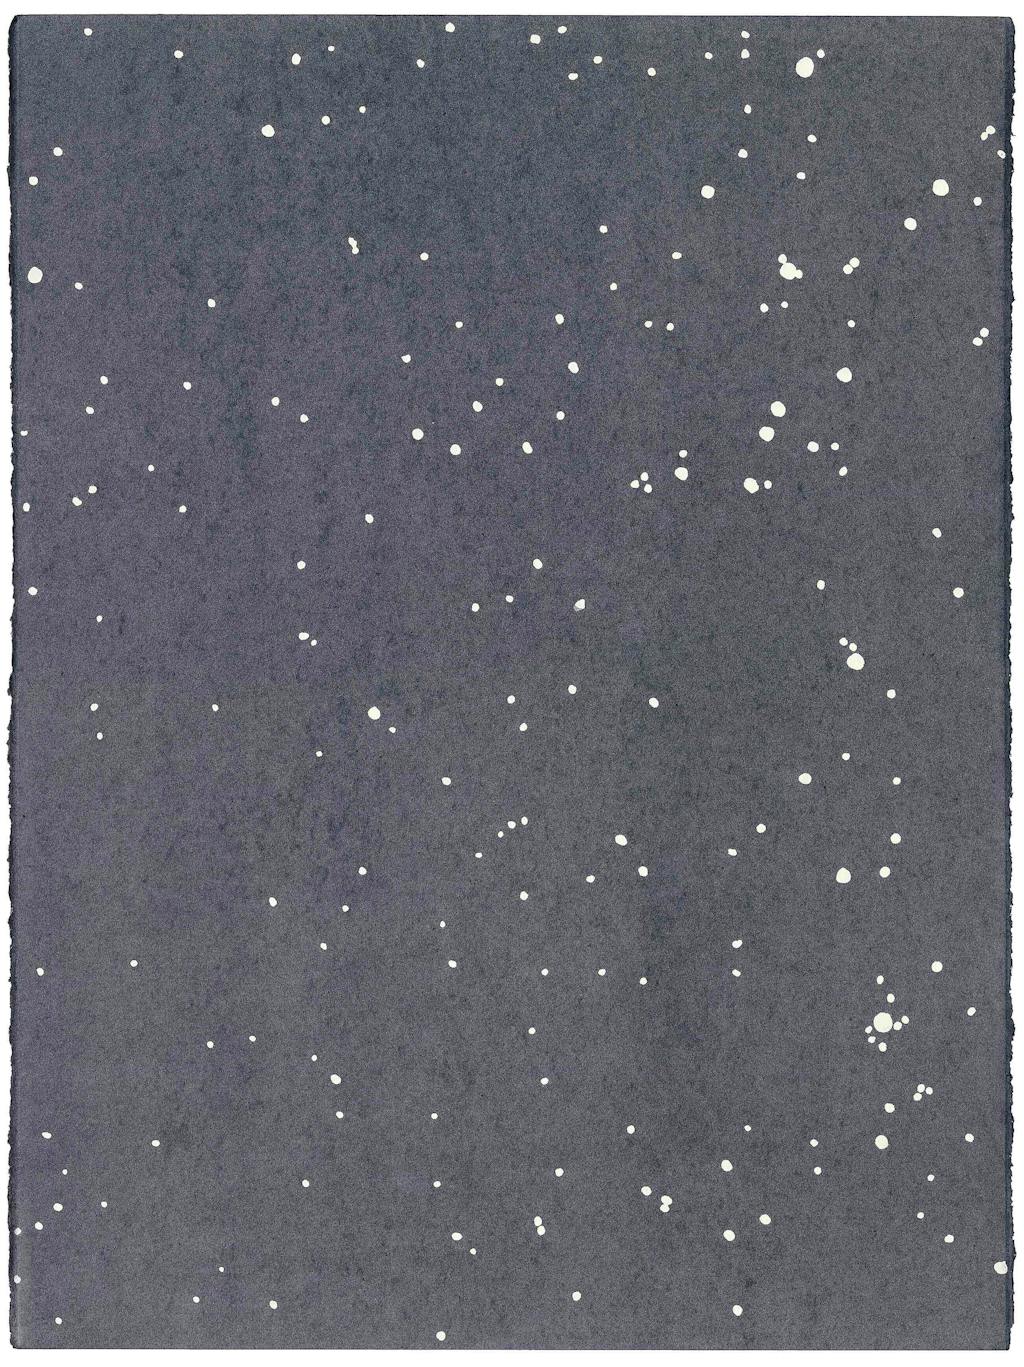 abolished constellation - © Paris Internationale